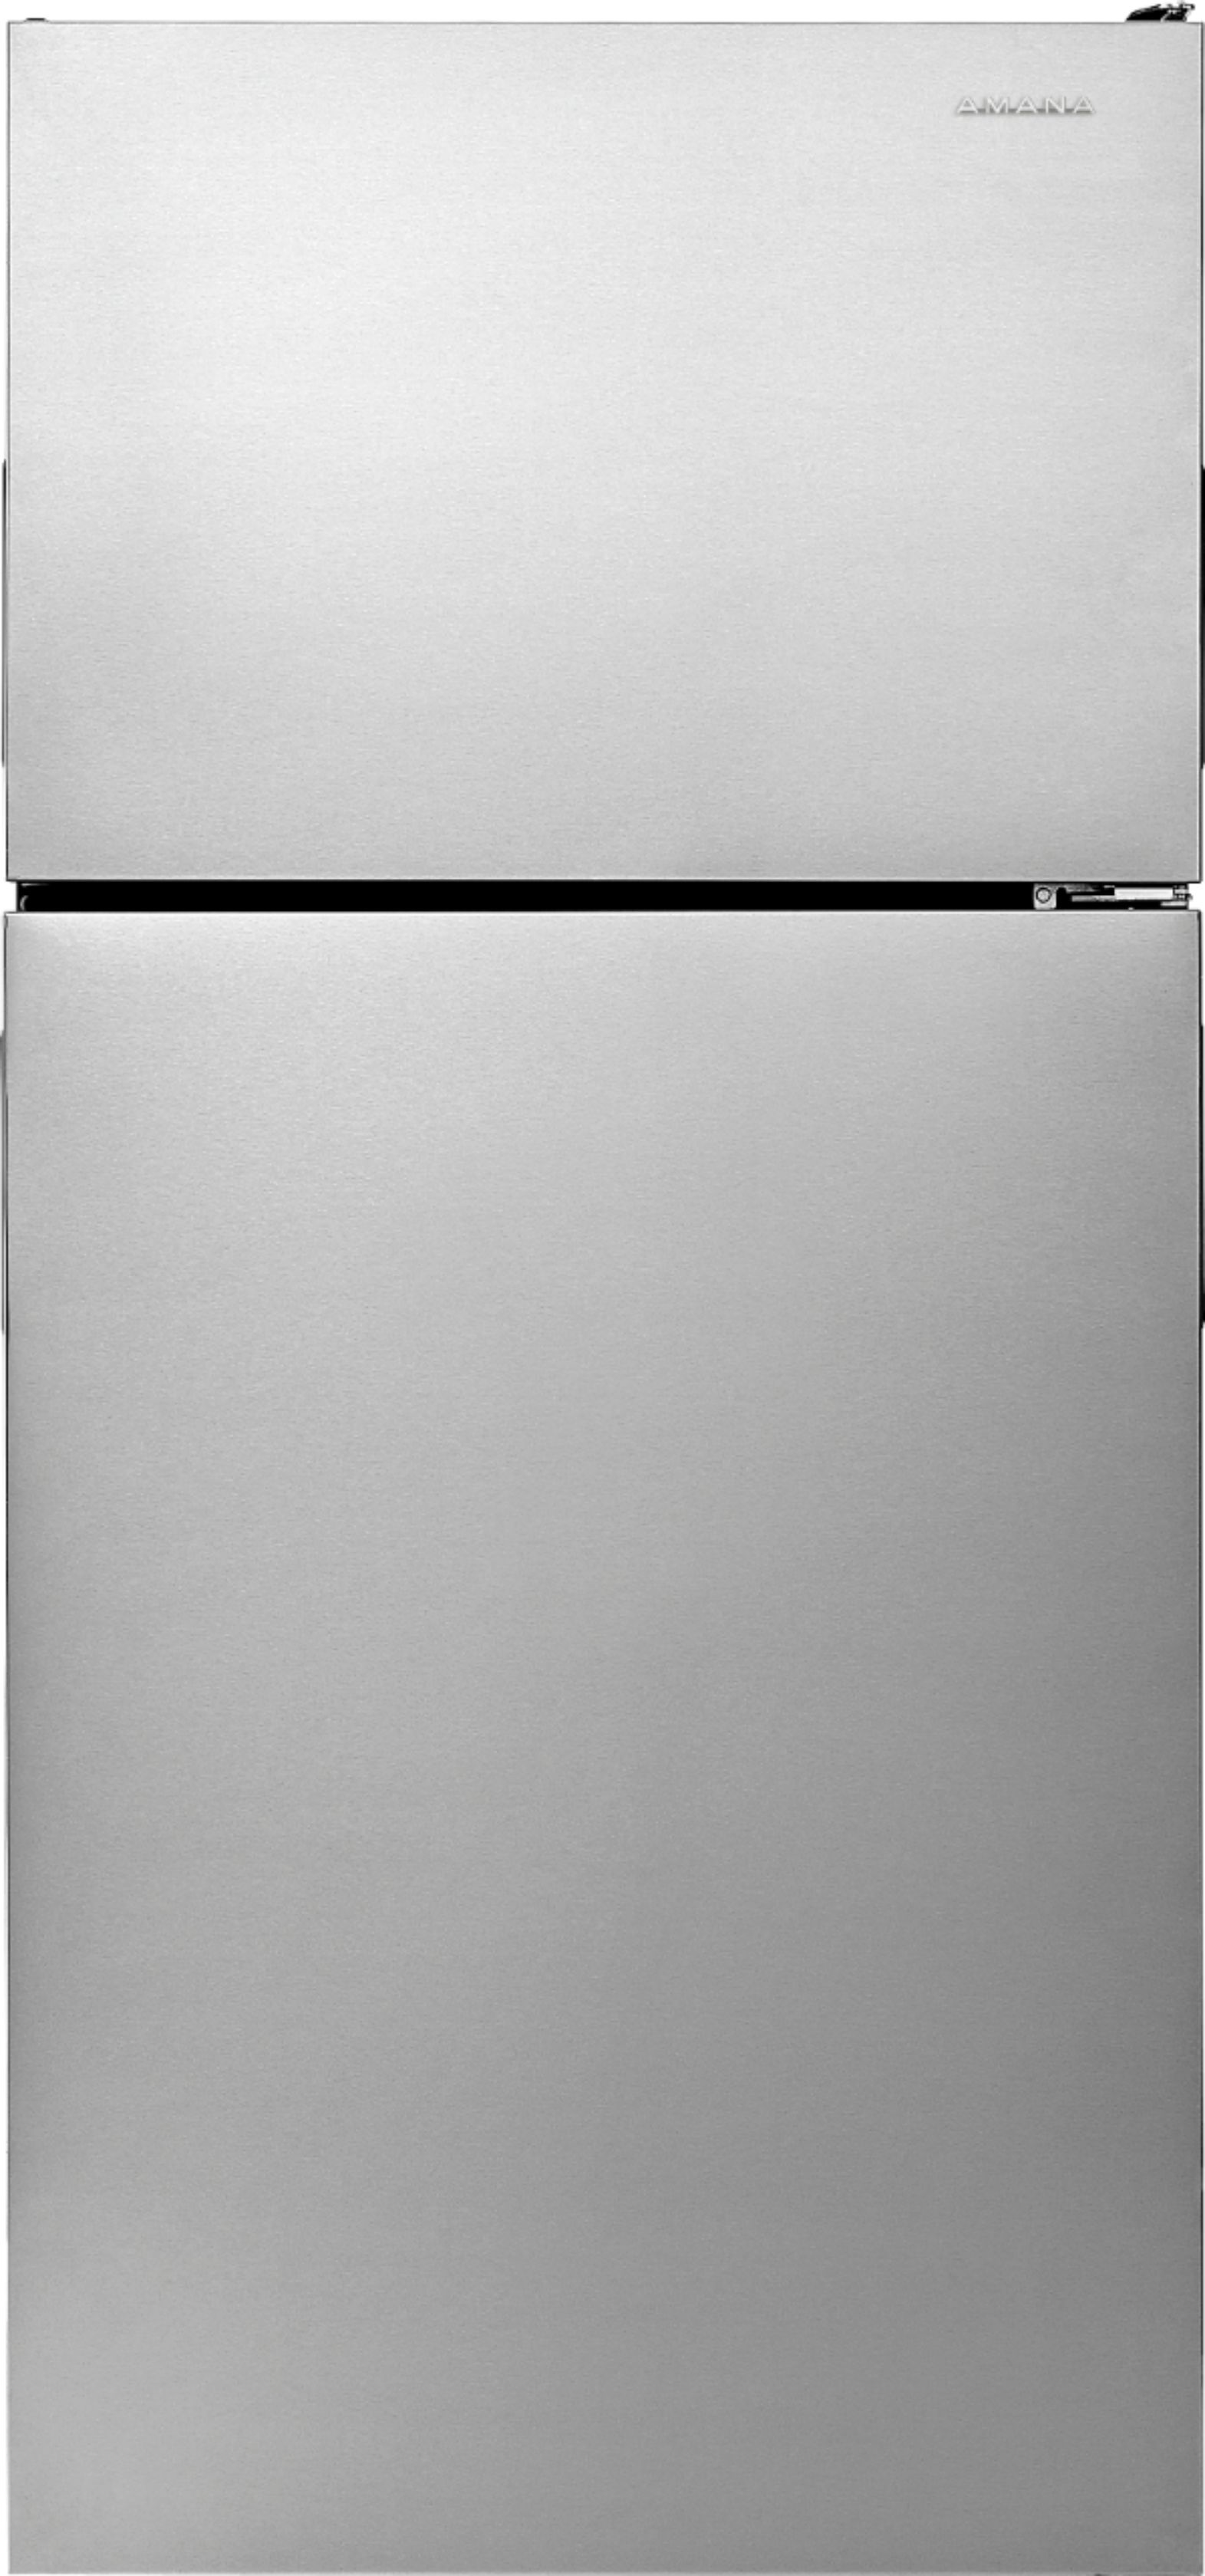 Amana - 18.2 Cu. Ft. Top-Freezer Refrigerator - Stainless steel